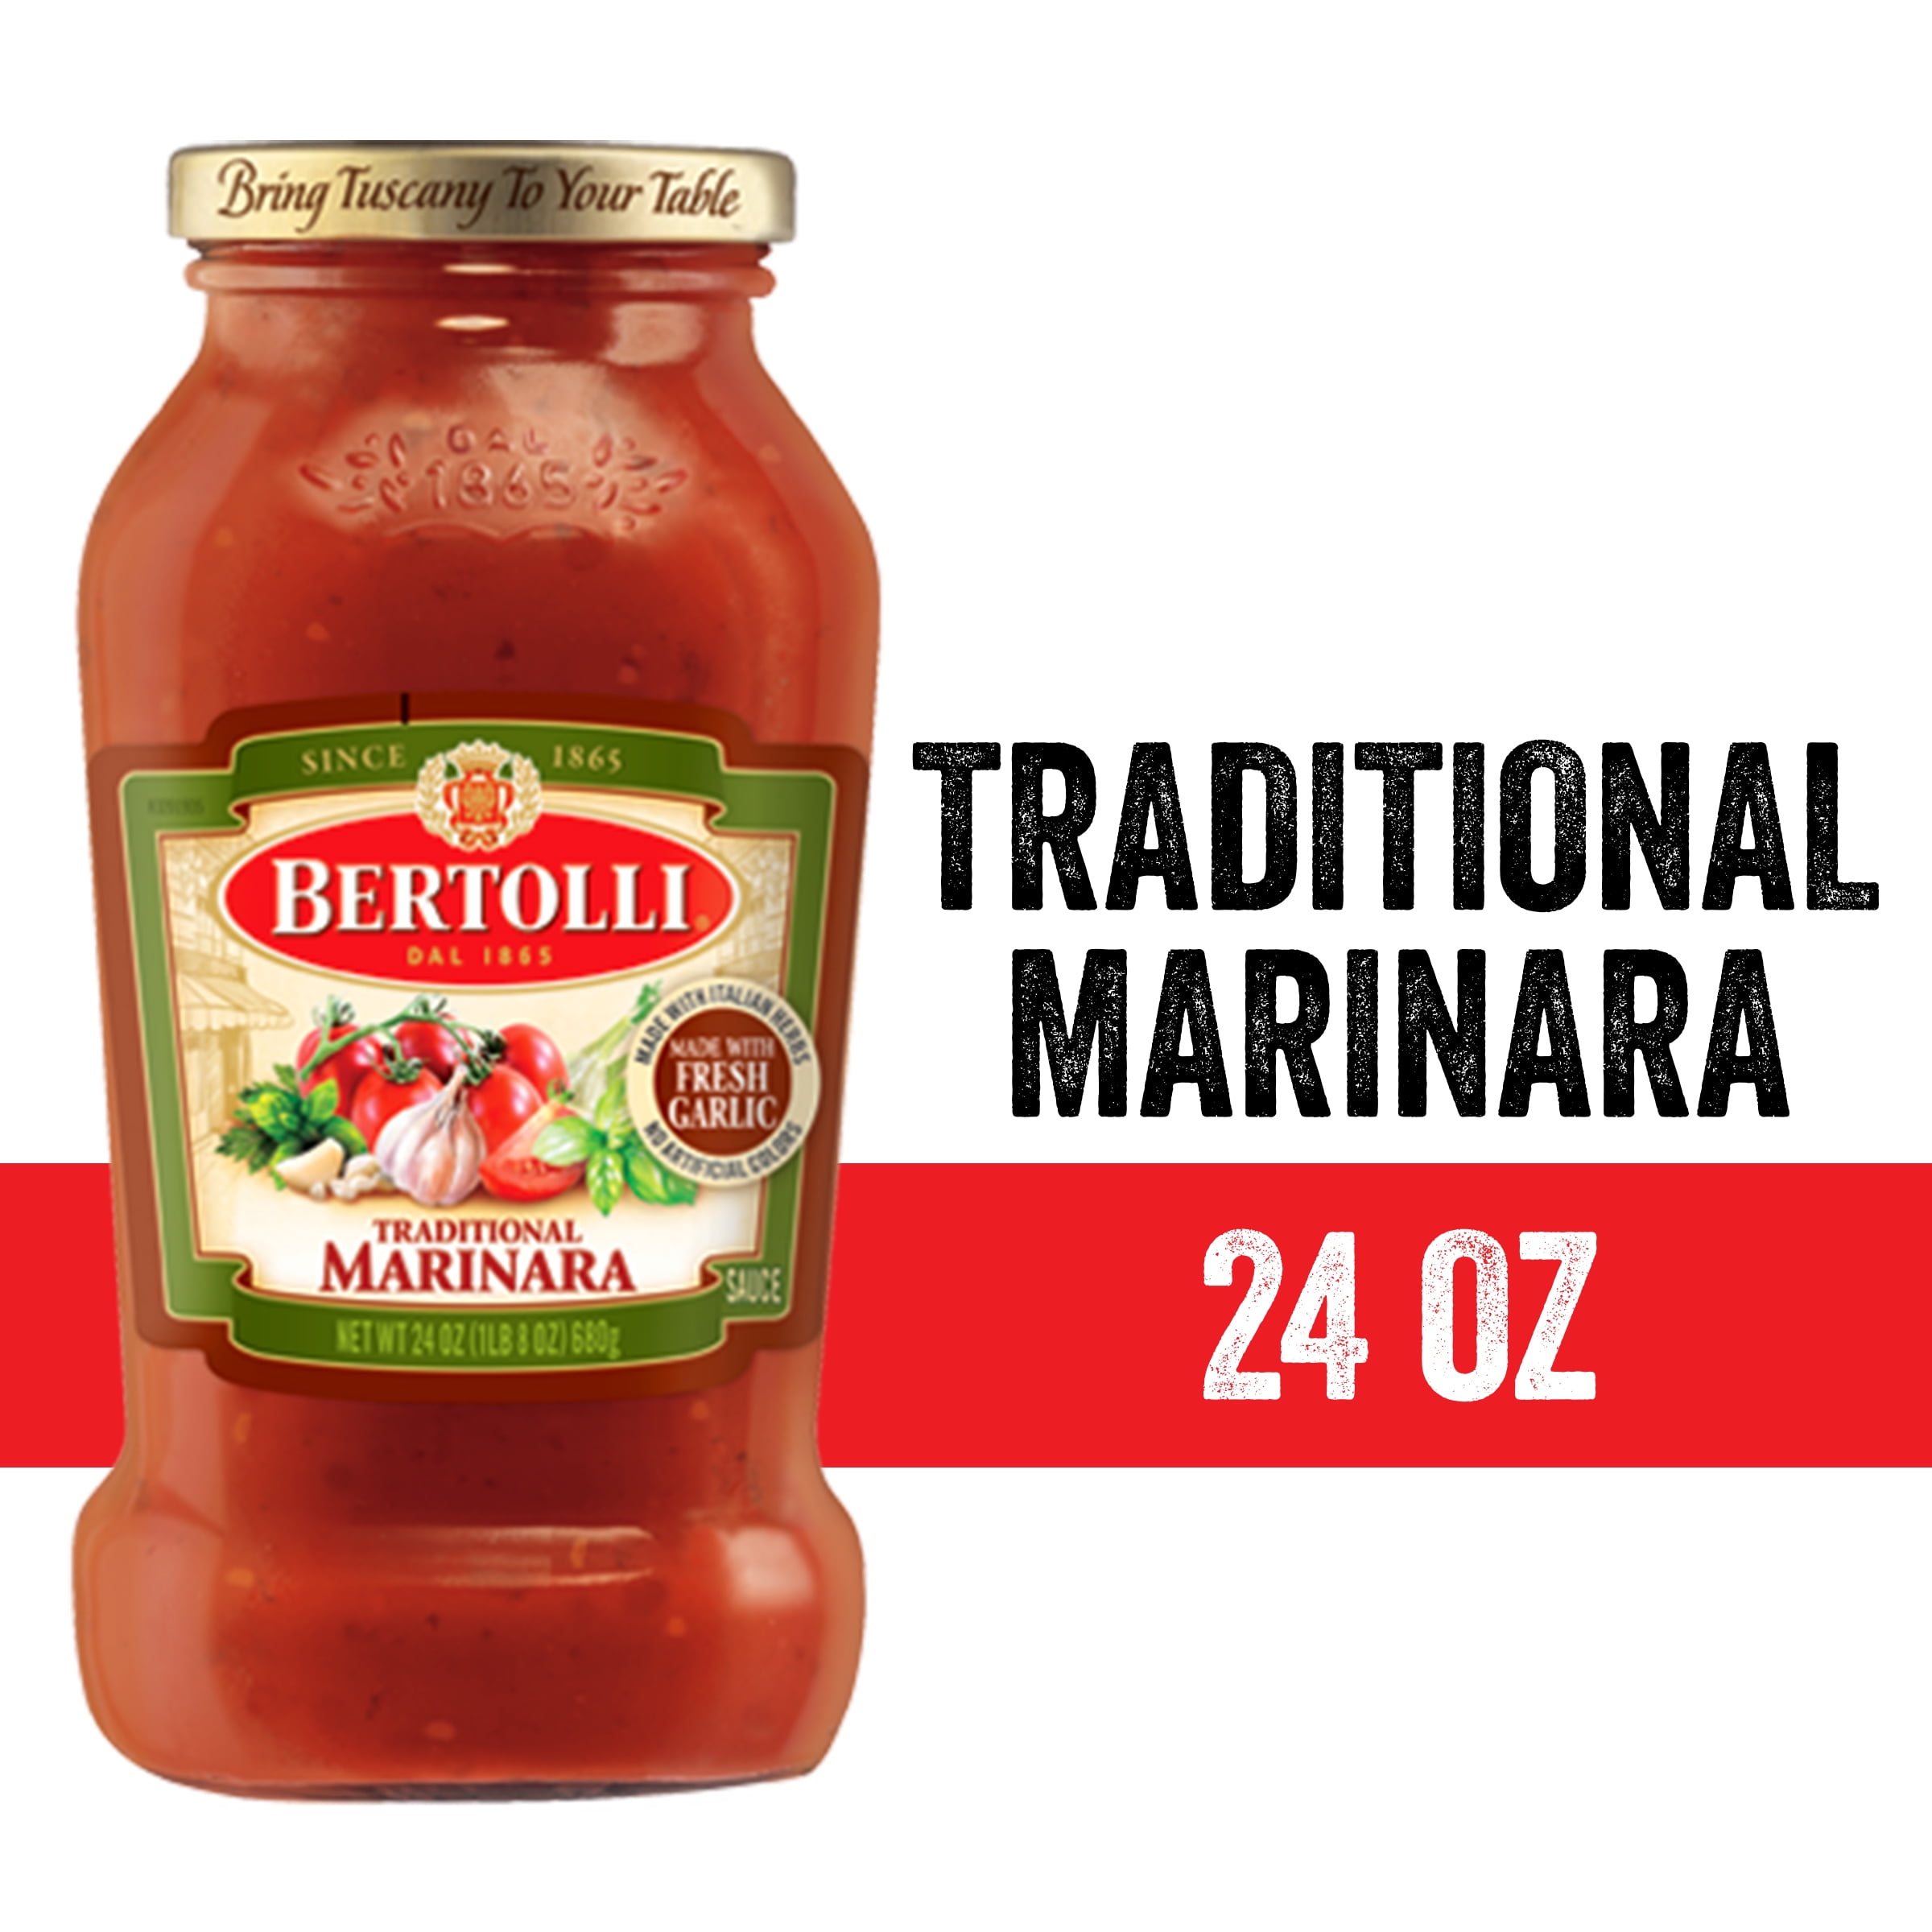 Bertolli Traditional Marinara Sauce with Italian Herbs and Fresh Garlic, Authentic Tuscan Style Pasta Sauce Made with Vine-Ripened Tomatoes, 24 OZ